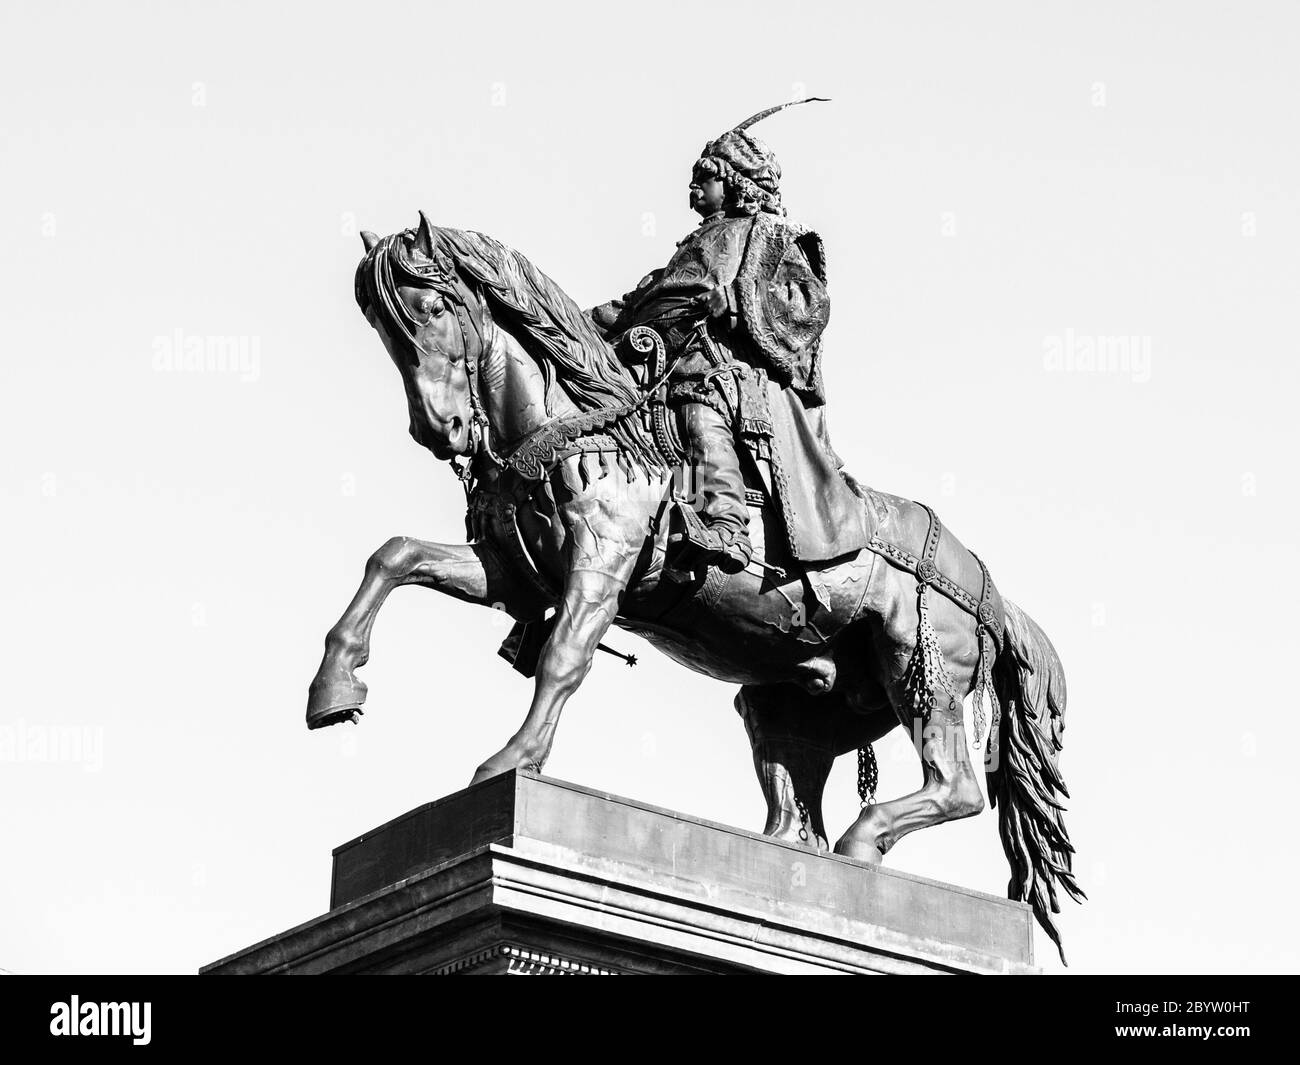 PODEBRADY, CZECH REPUBLIC - FEBRUARY 26, 2018: Equestrian statue of George of Podebrady, Jiri z Podebrad, in Podebrady, Czech Republic. Black and white image. Stock Photo